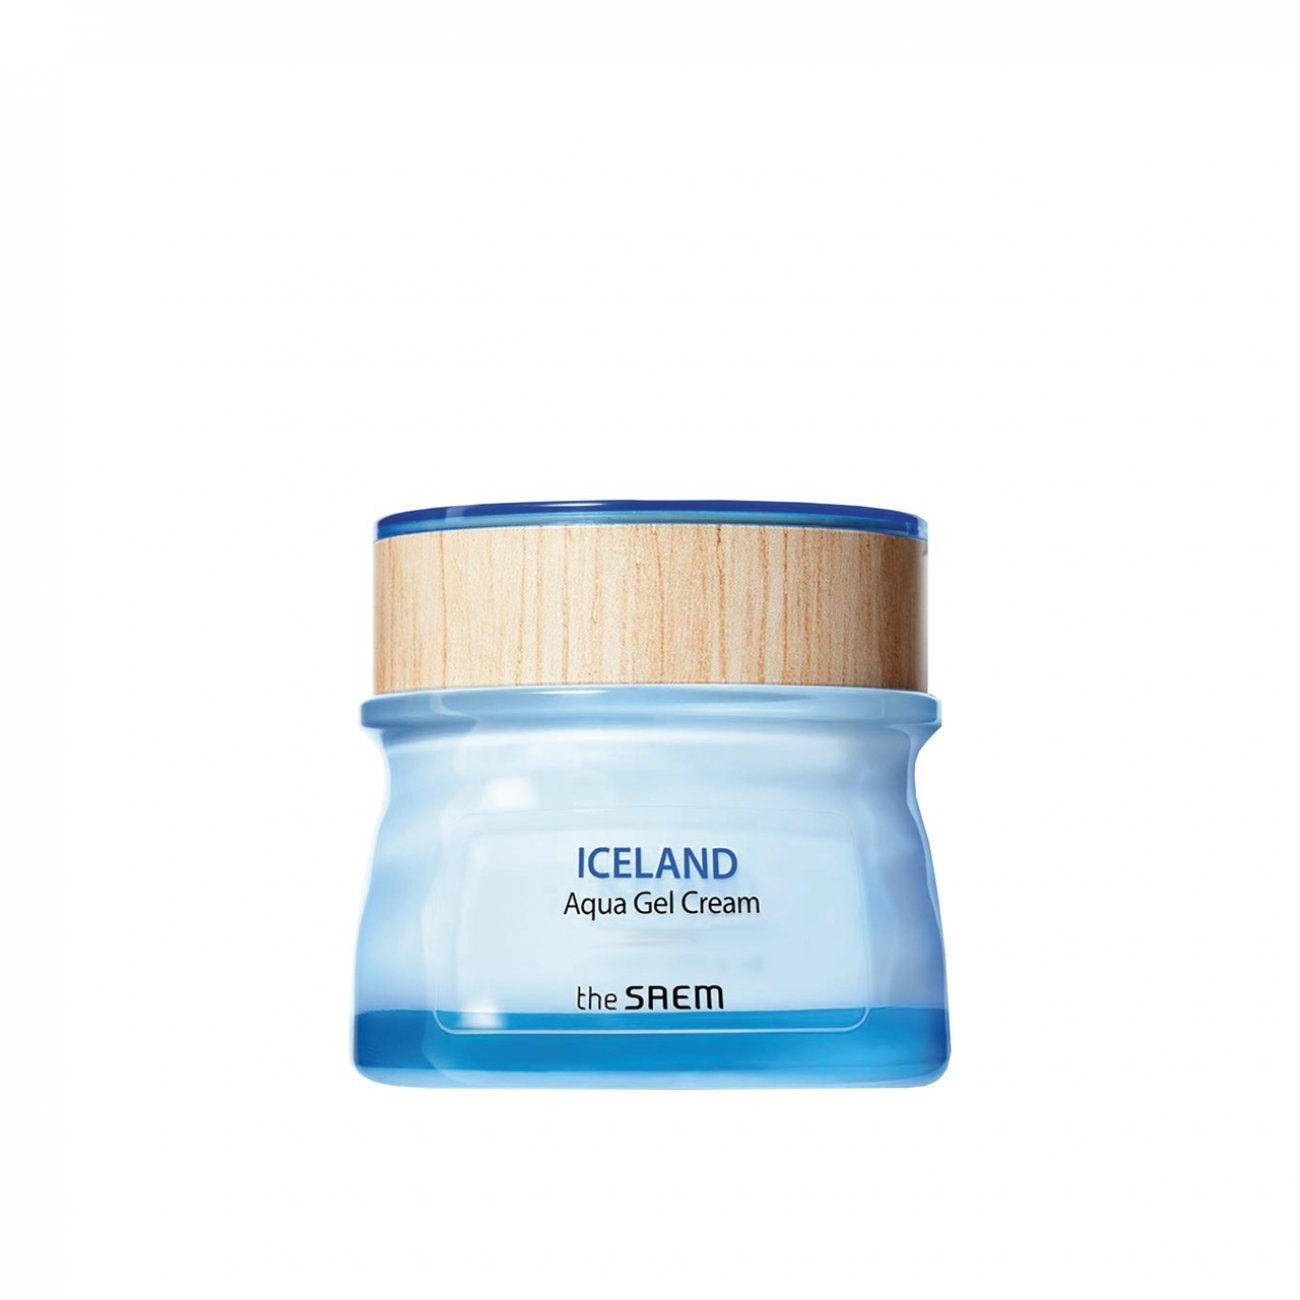 Iceland Aqua Gel Cream 60ml